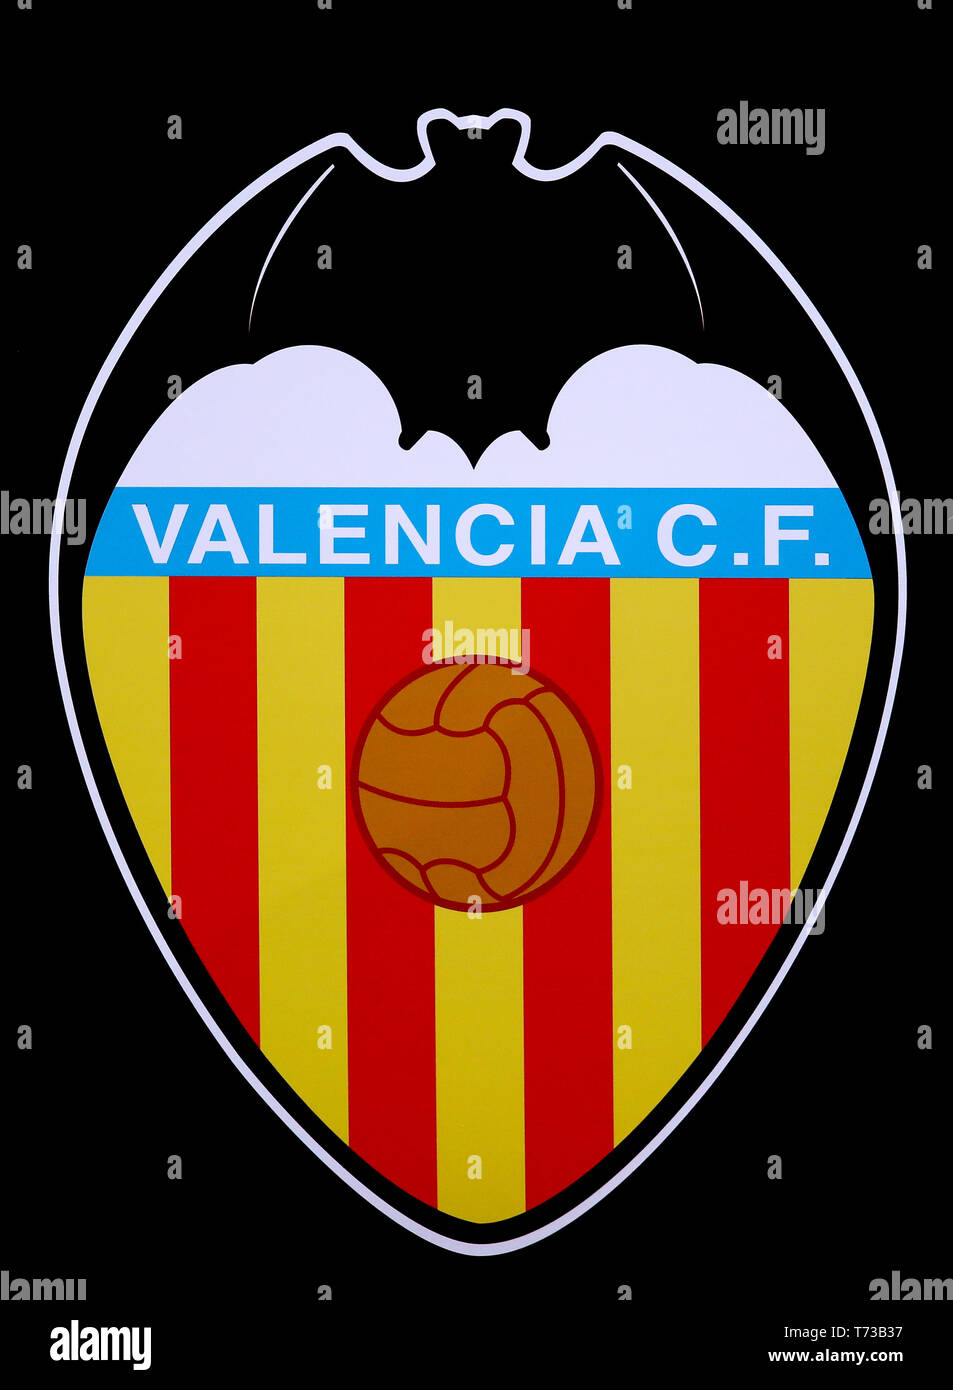 Club crest of Valencia C.F. - Arsenal v Valencia, UEFA Europa League Semi Final - 1st Leg, Emirates Stadium, London (Holloway) - 2nd May 2019 Stock Photo